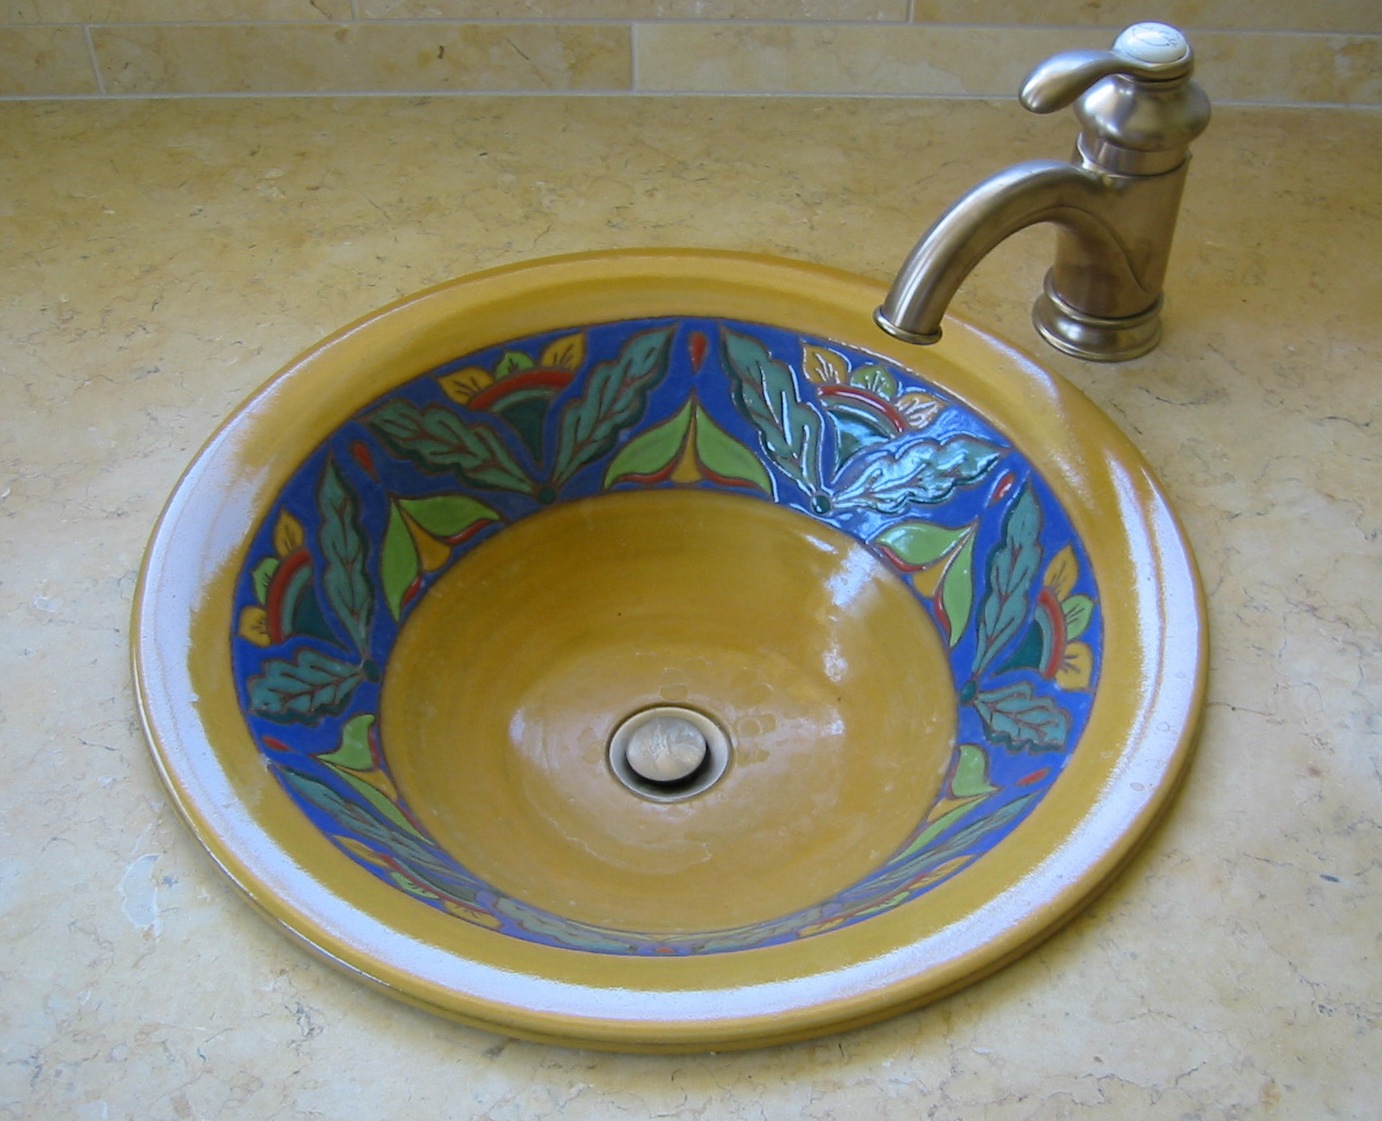 Yellow Sink in Cuerda Seca Style, Set in Travertine Bathroom